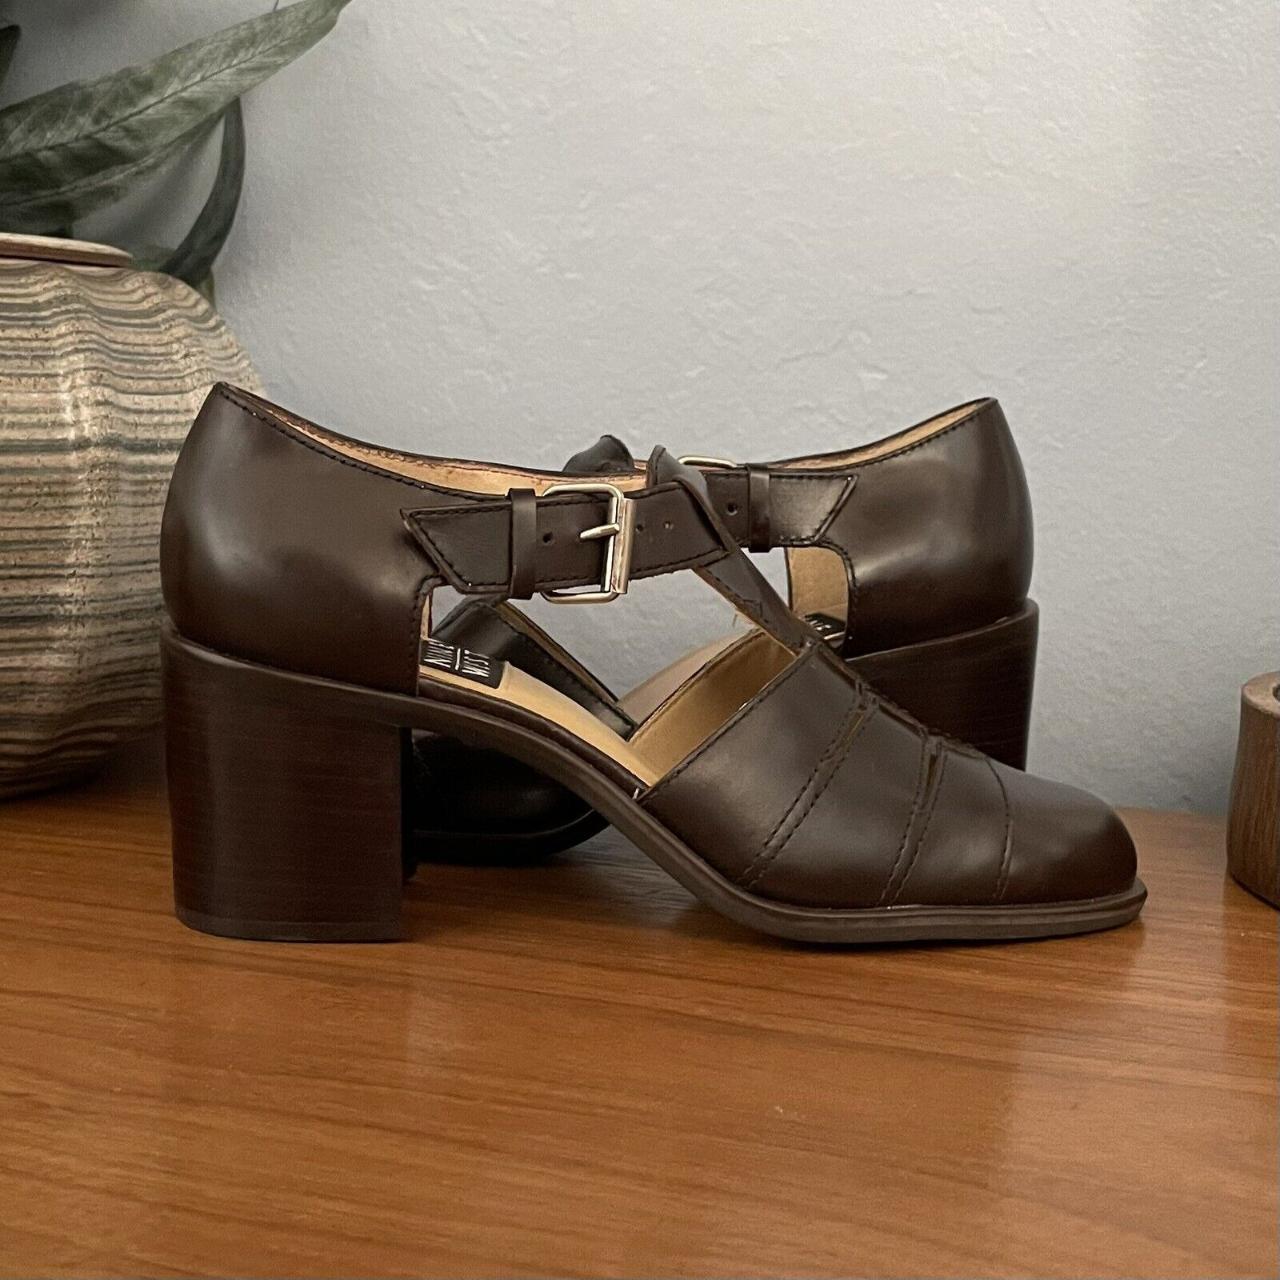 Nine West Everie 2 (Brown) Women's Shoes - ShopStyle Sandals